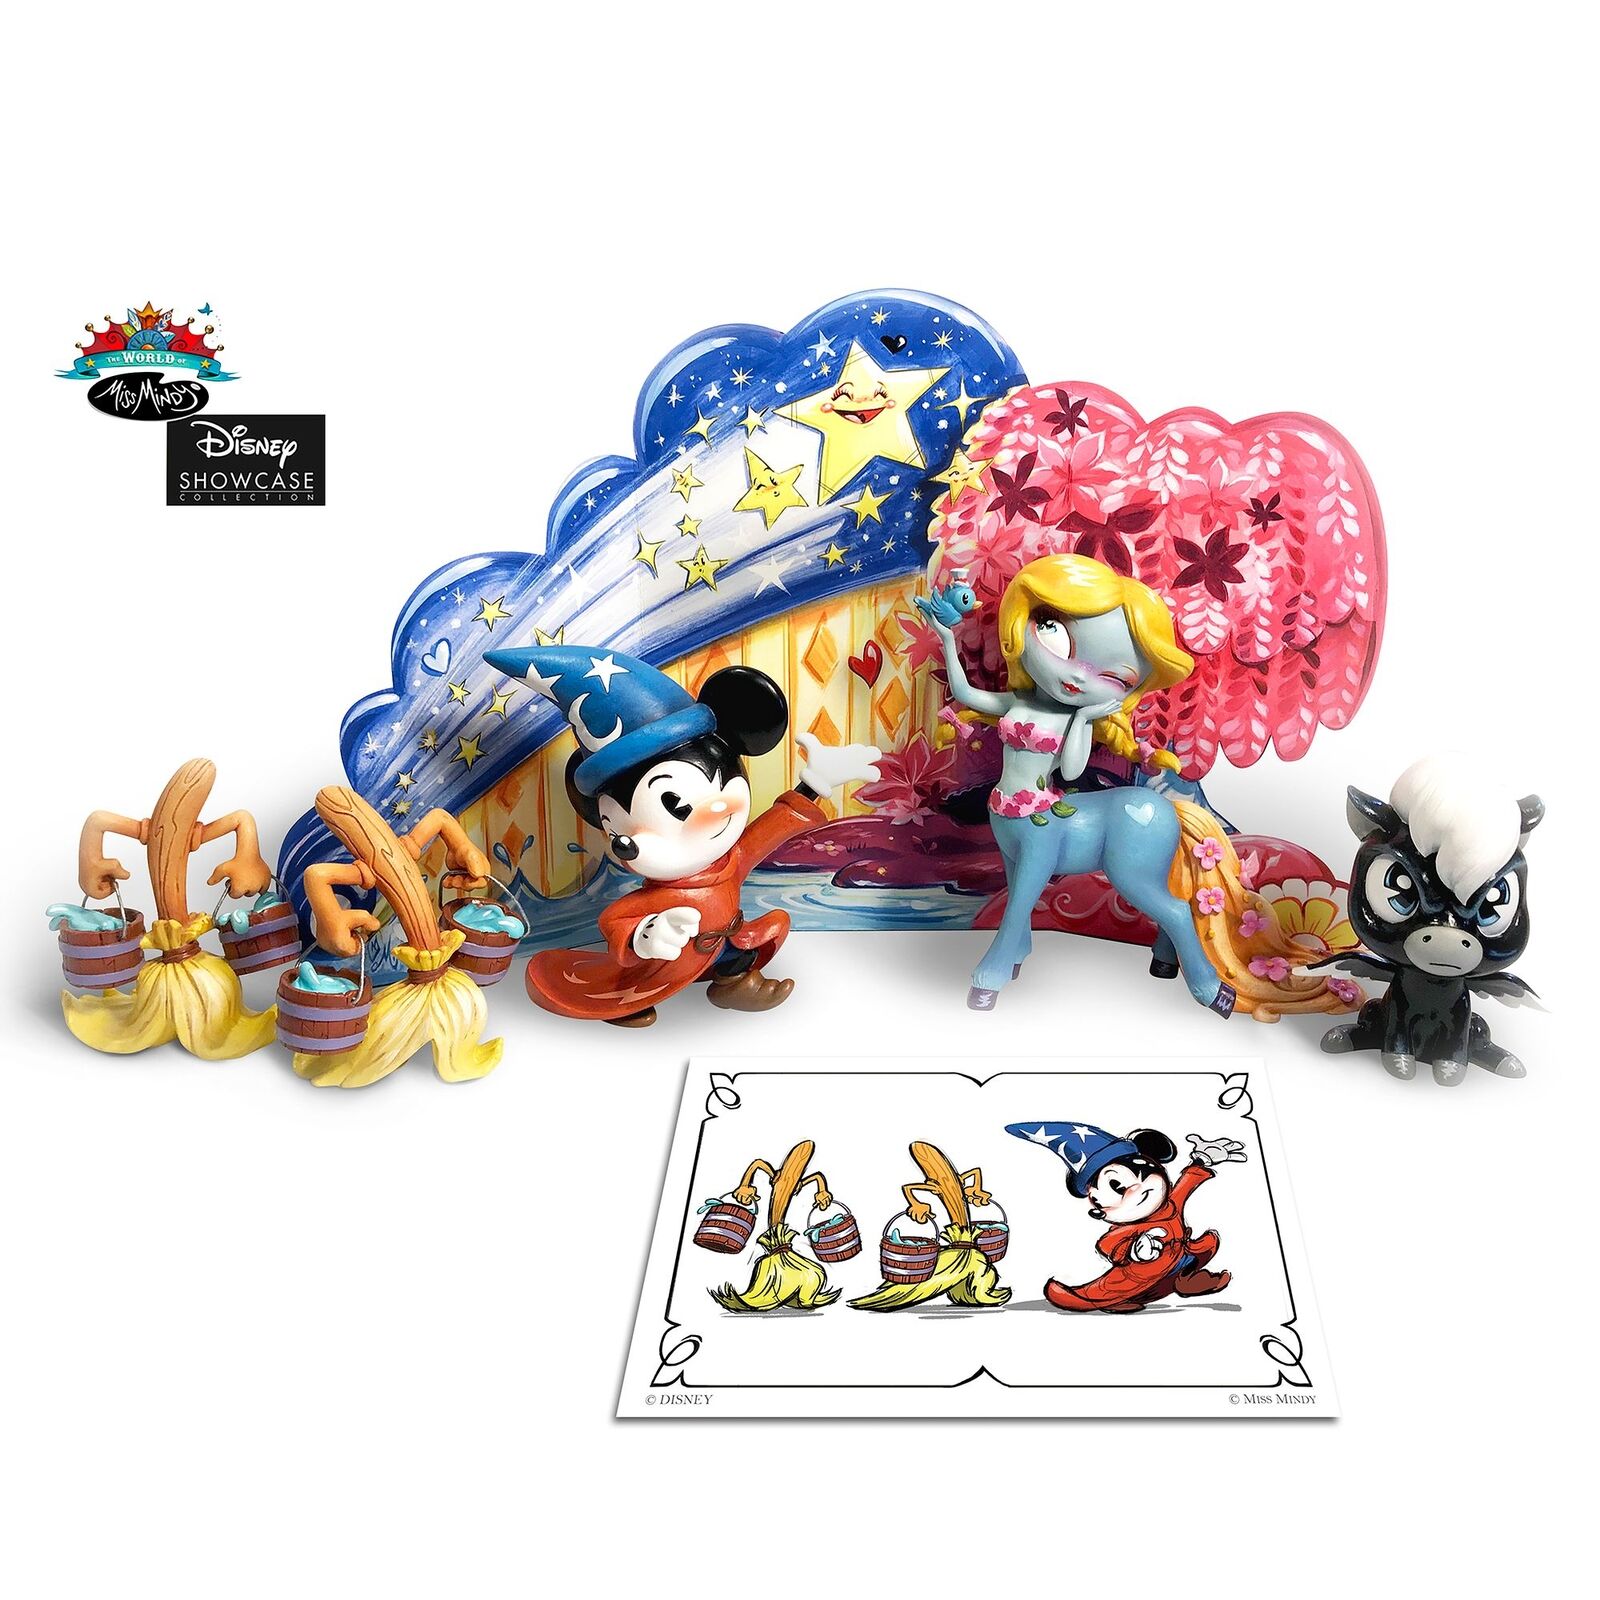 Enesco World of Miss Mindy Disney Fantasia Characters Deluxe Figurine Set